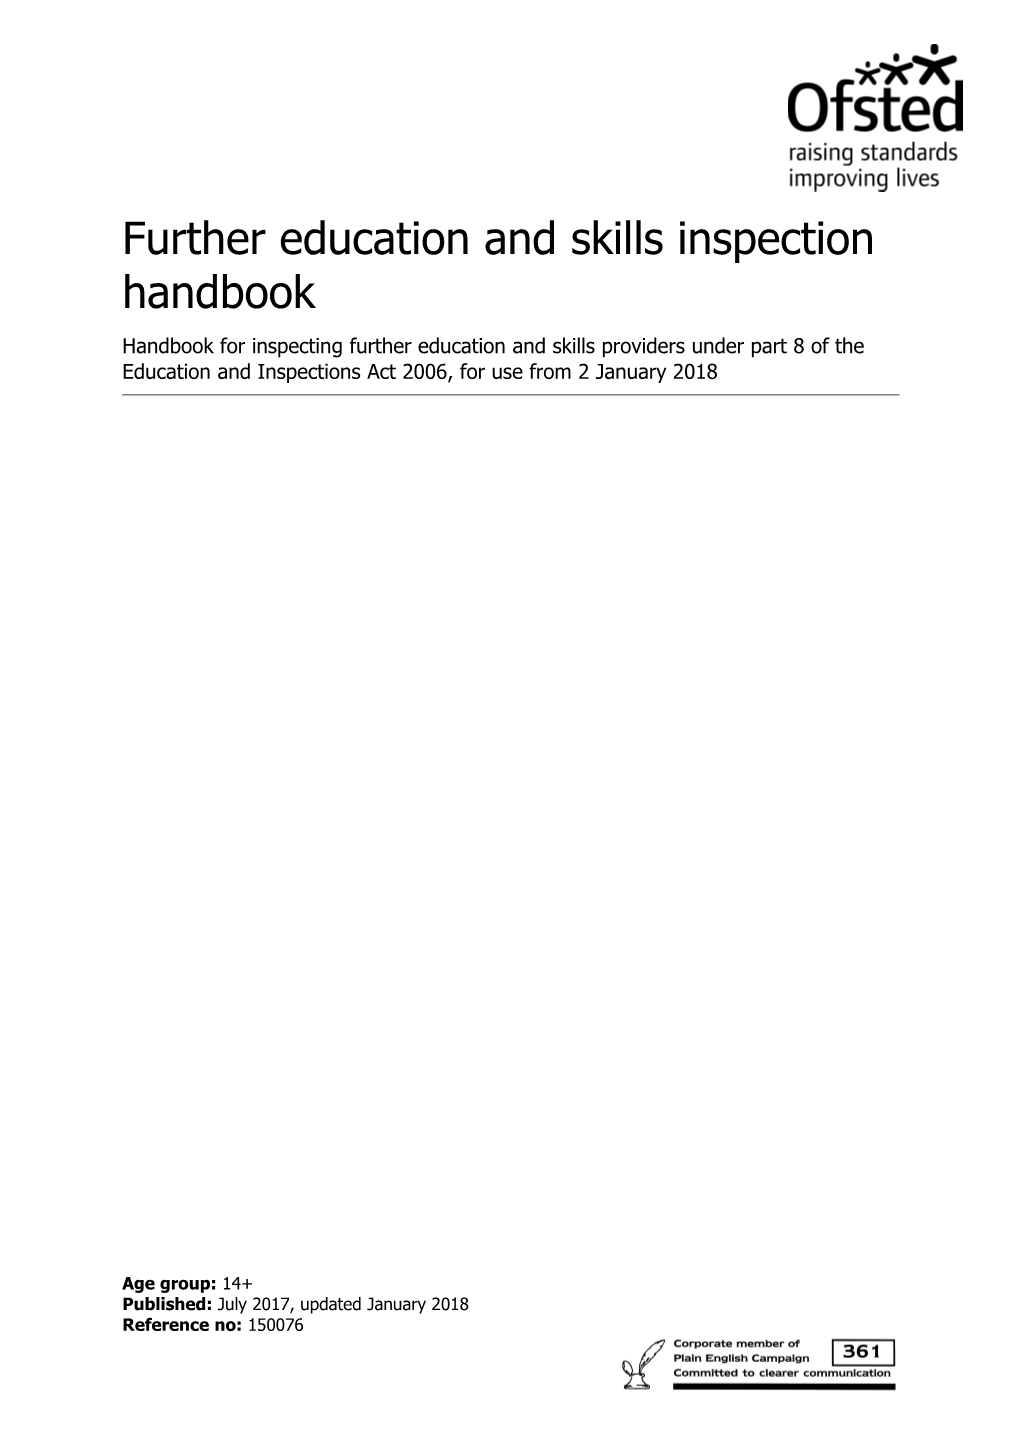 Further Education and Skills Inspection Handbook